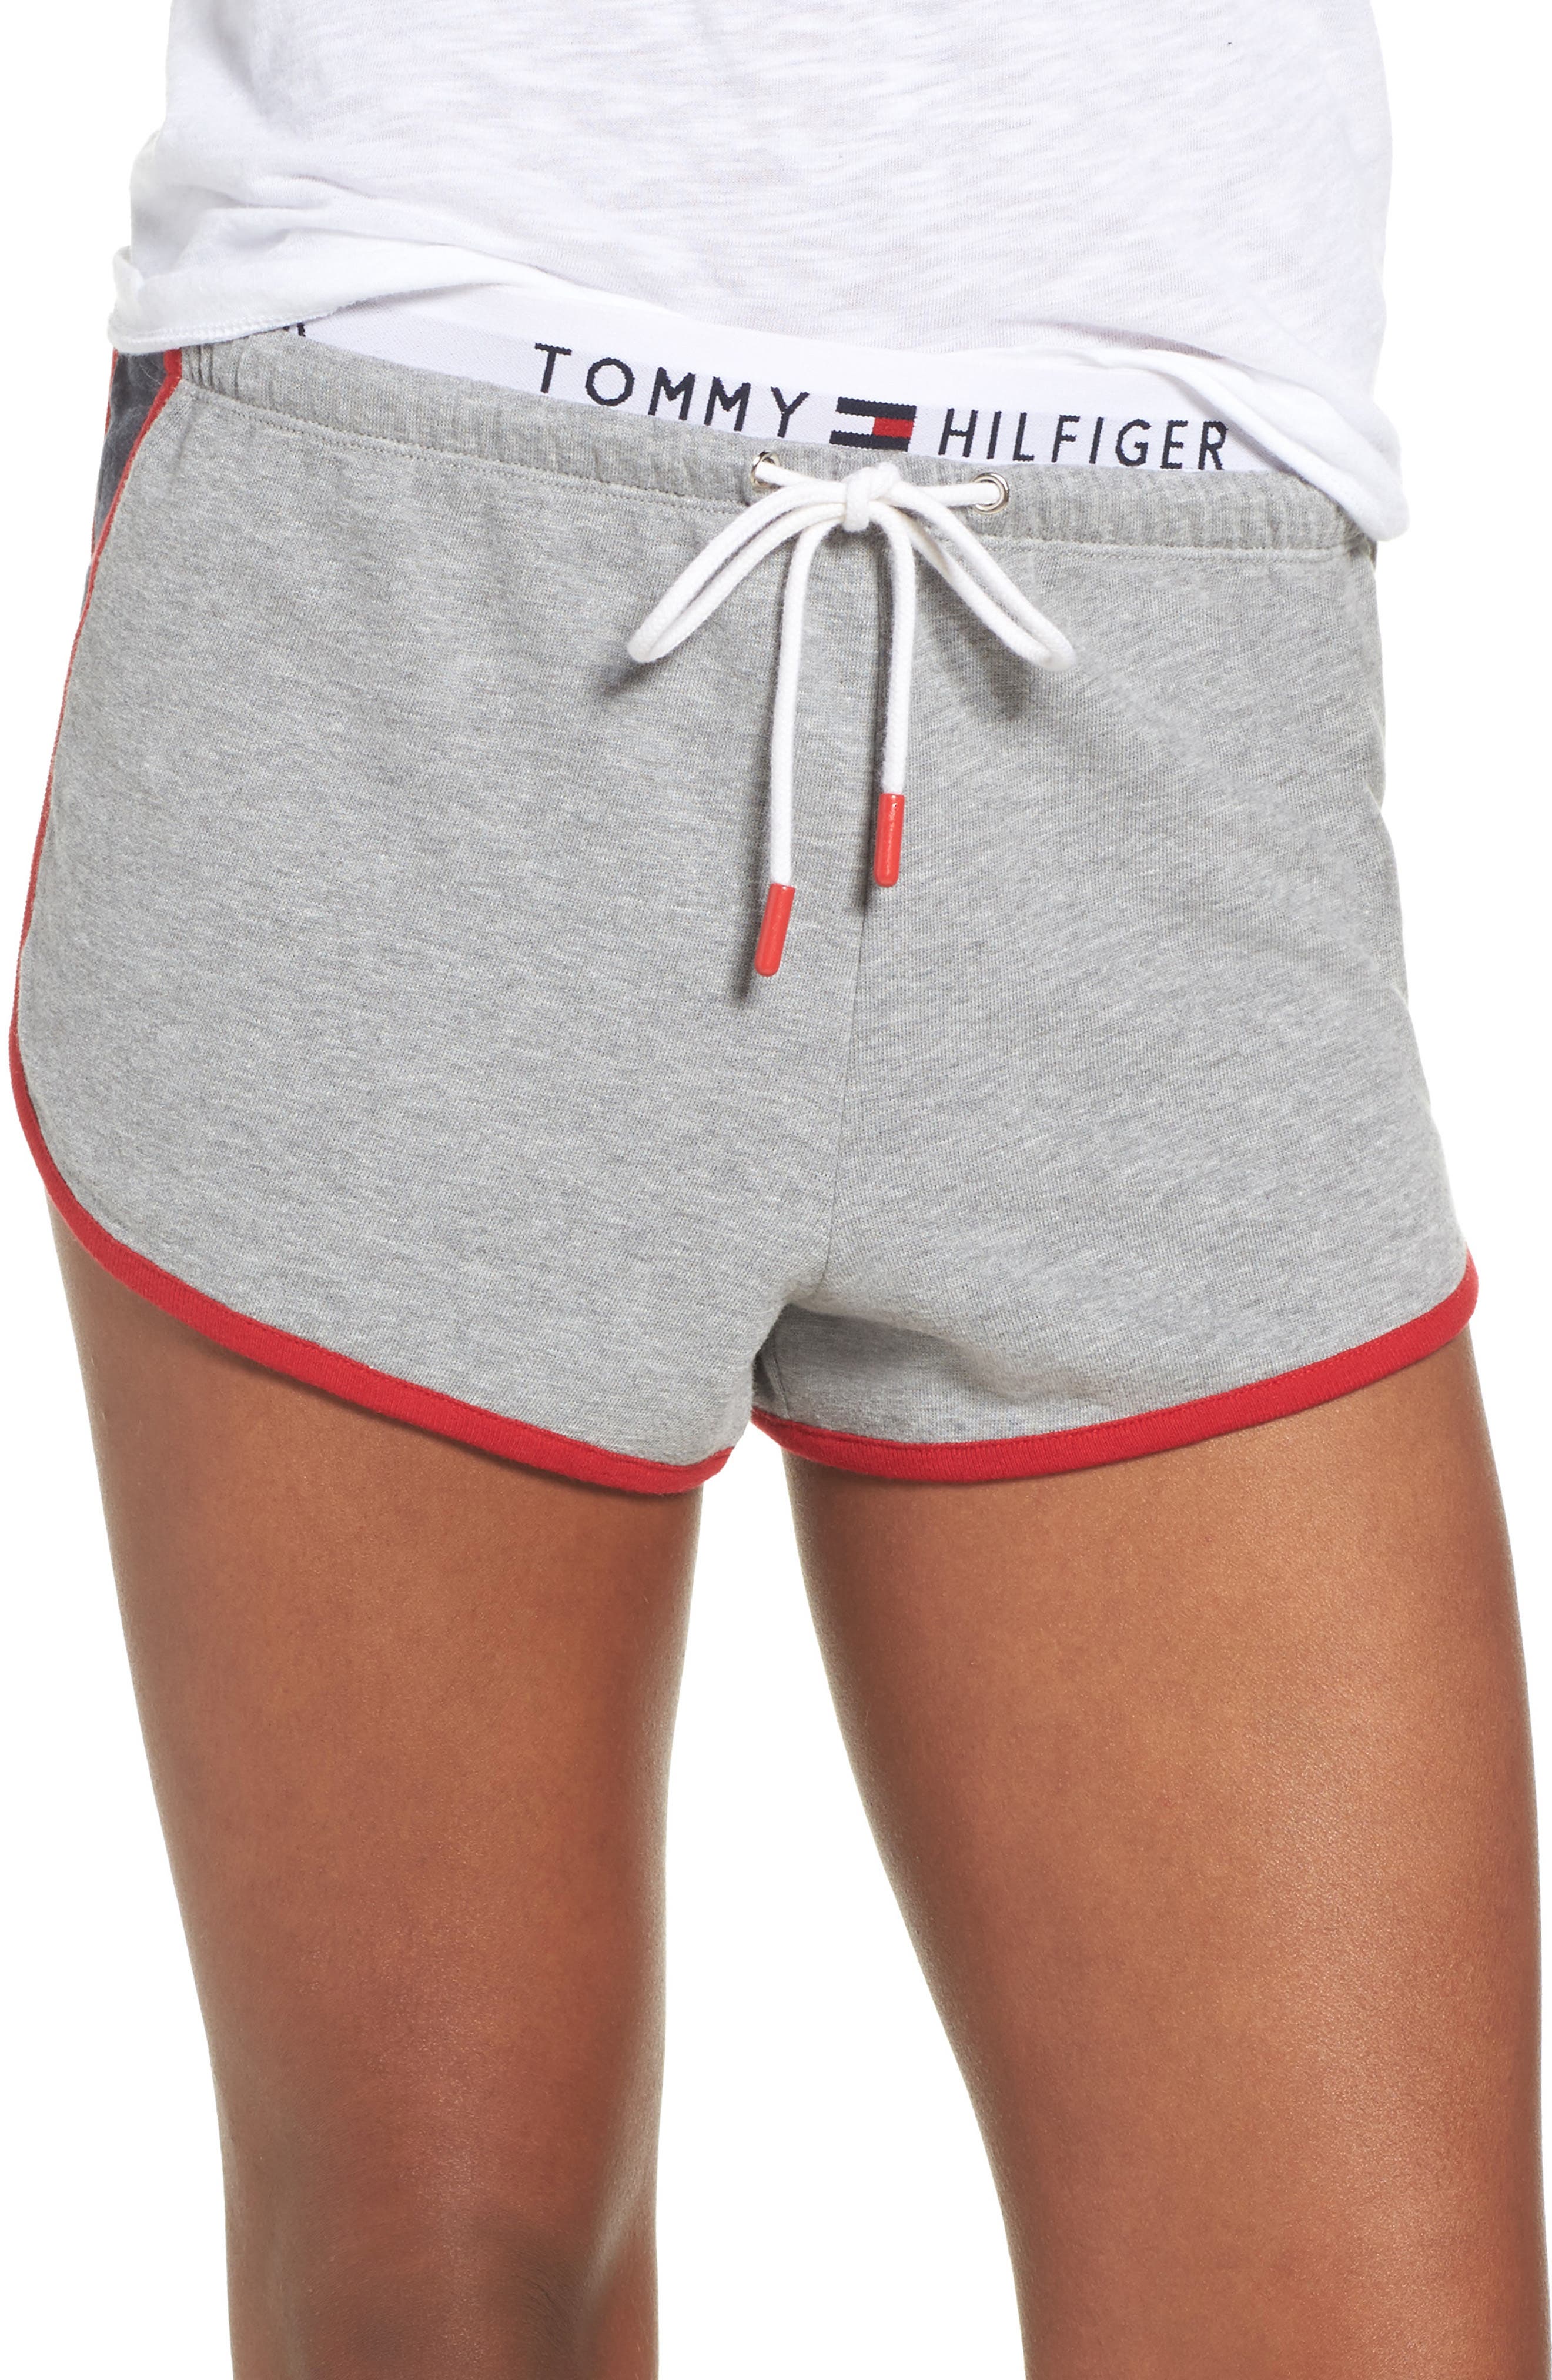 tommy hilfiger women's retro shorts